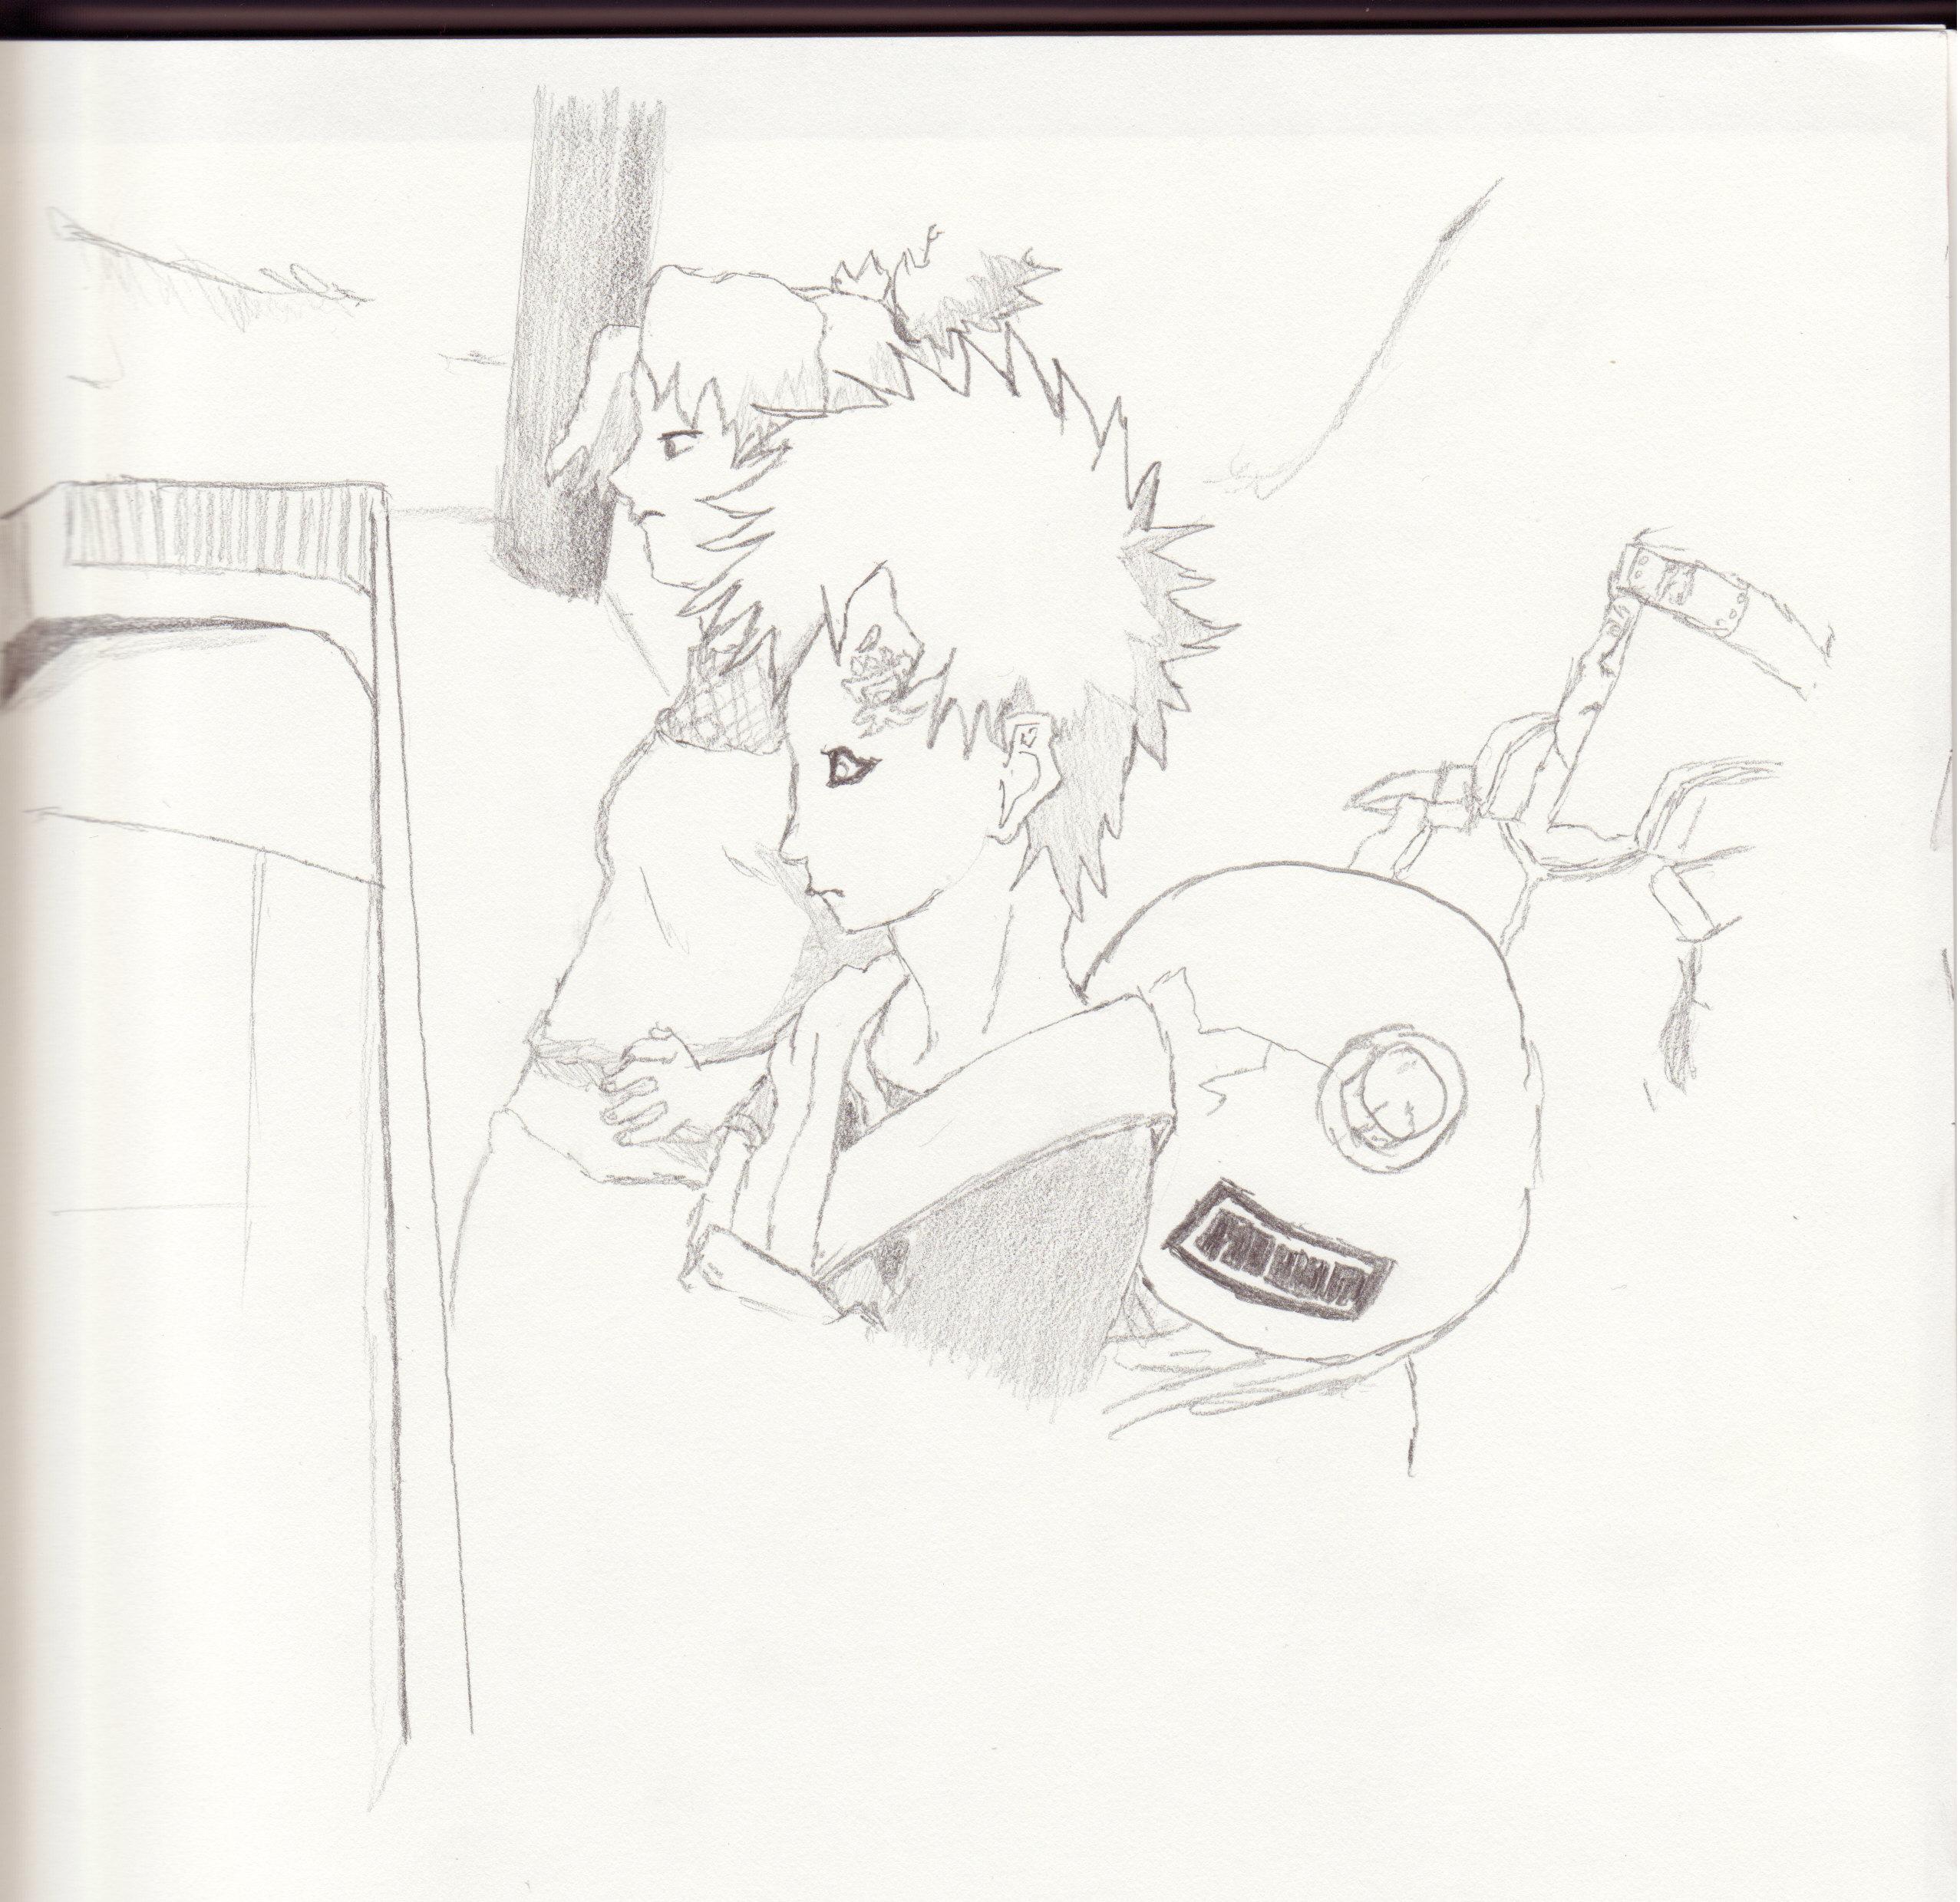 Naruto by Danny519